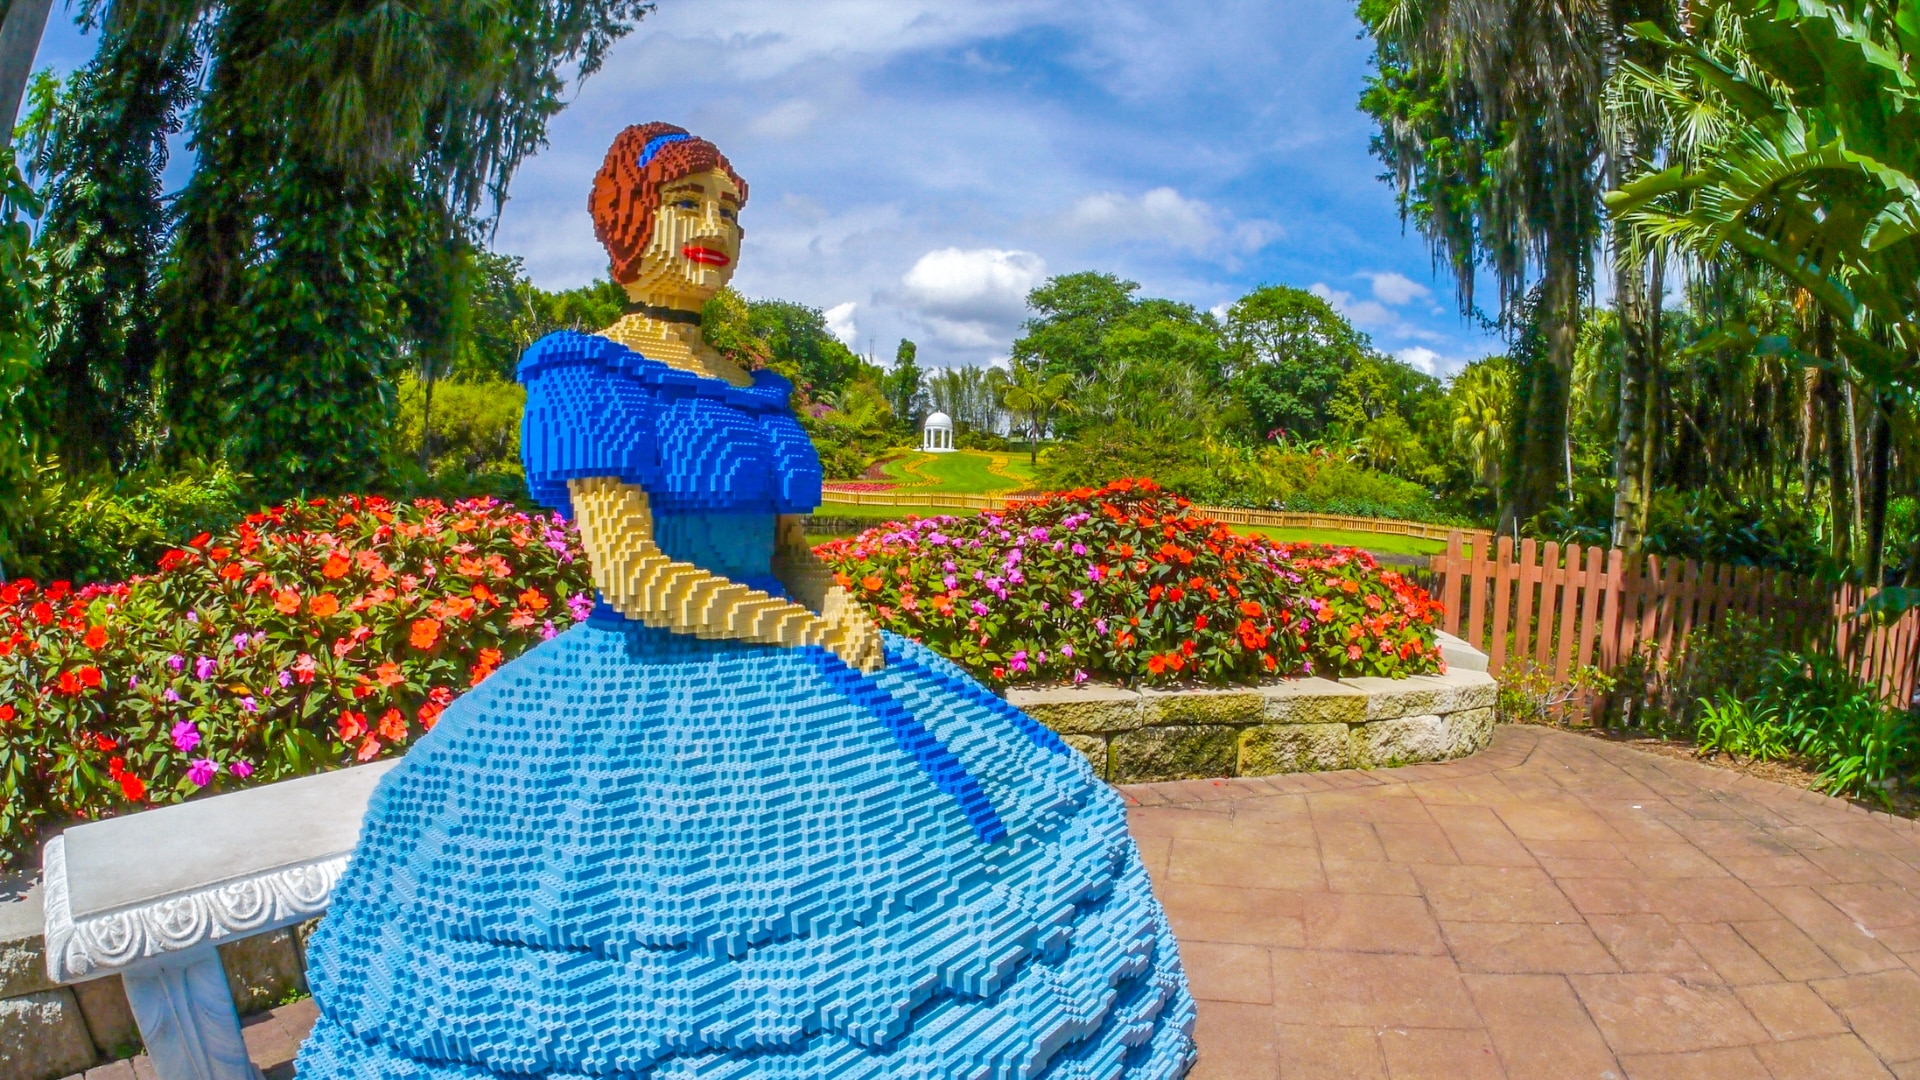 Legoland Florida - Cypress Gardens